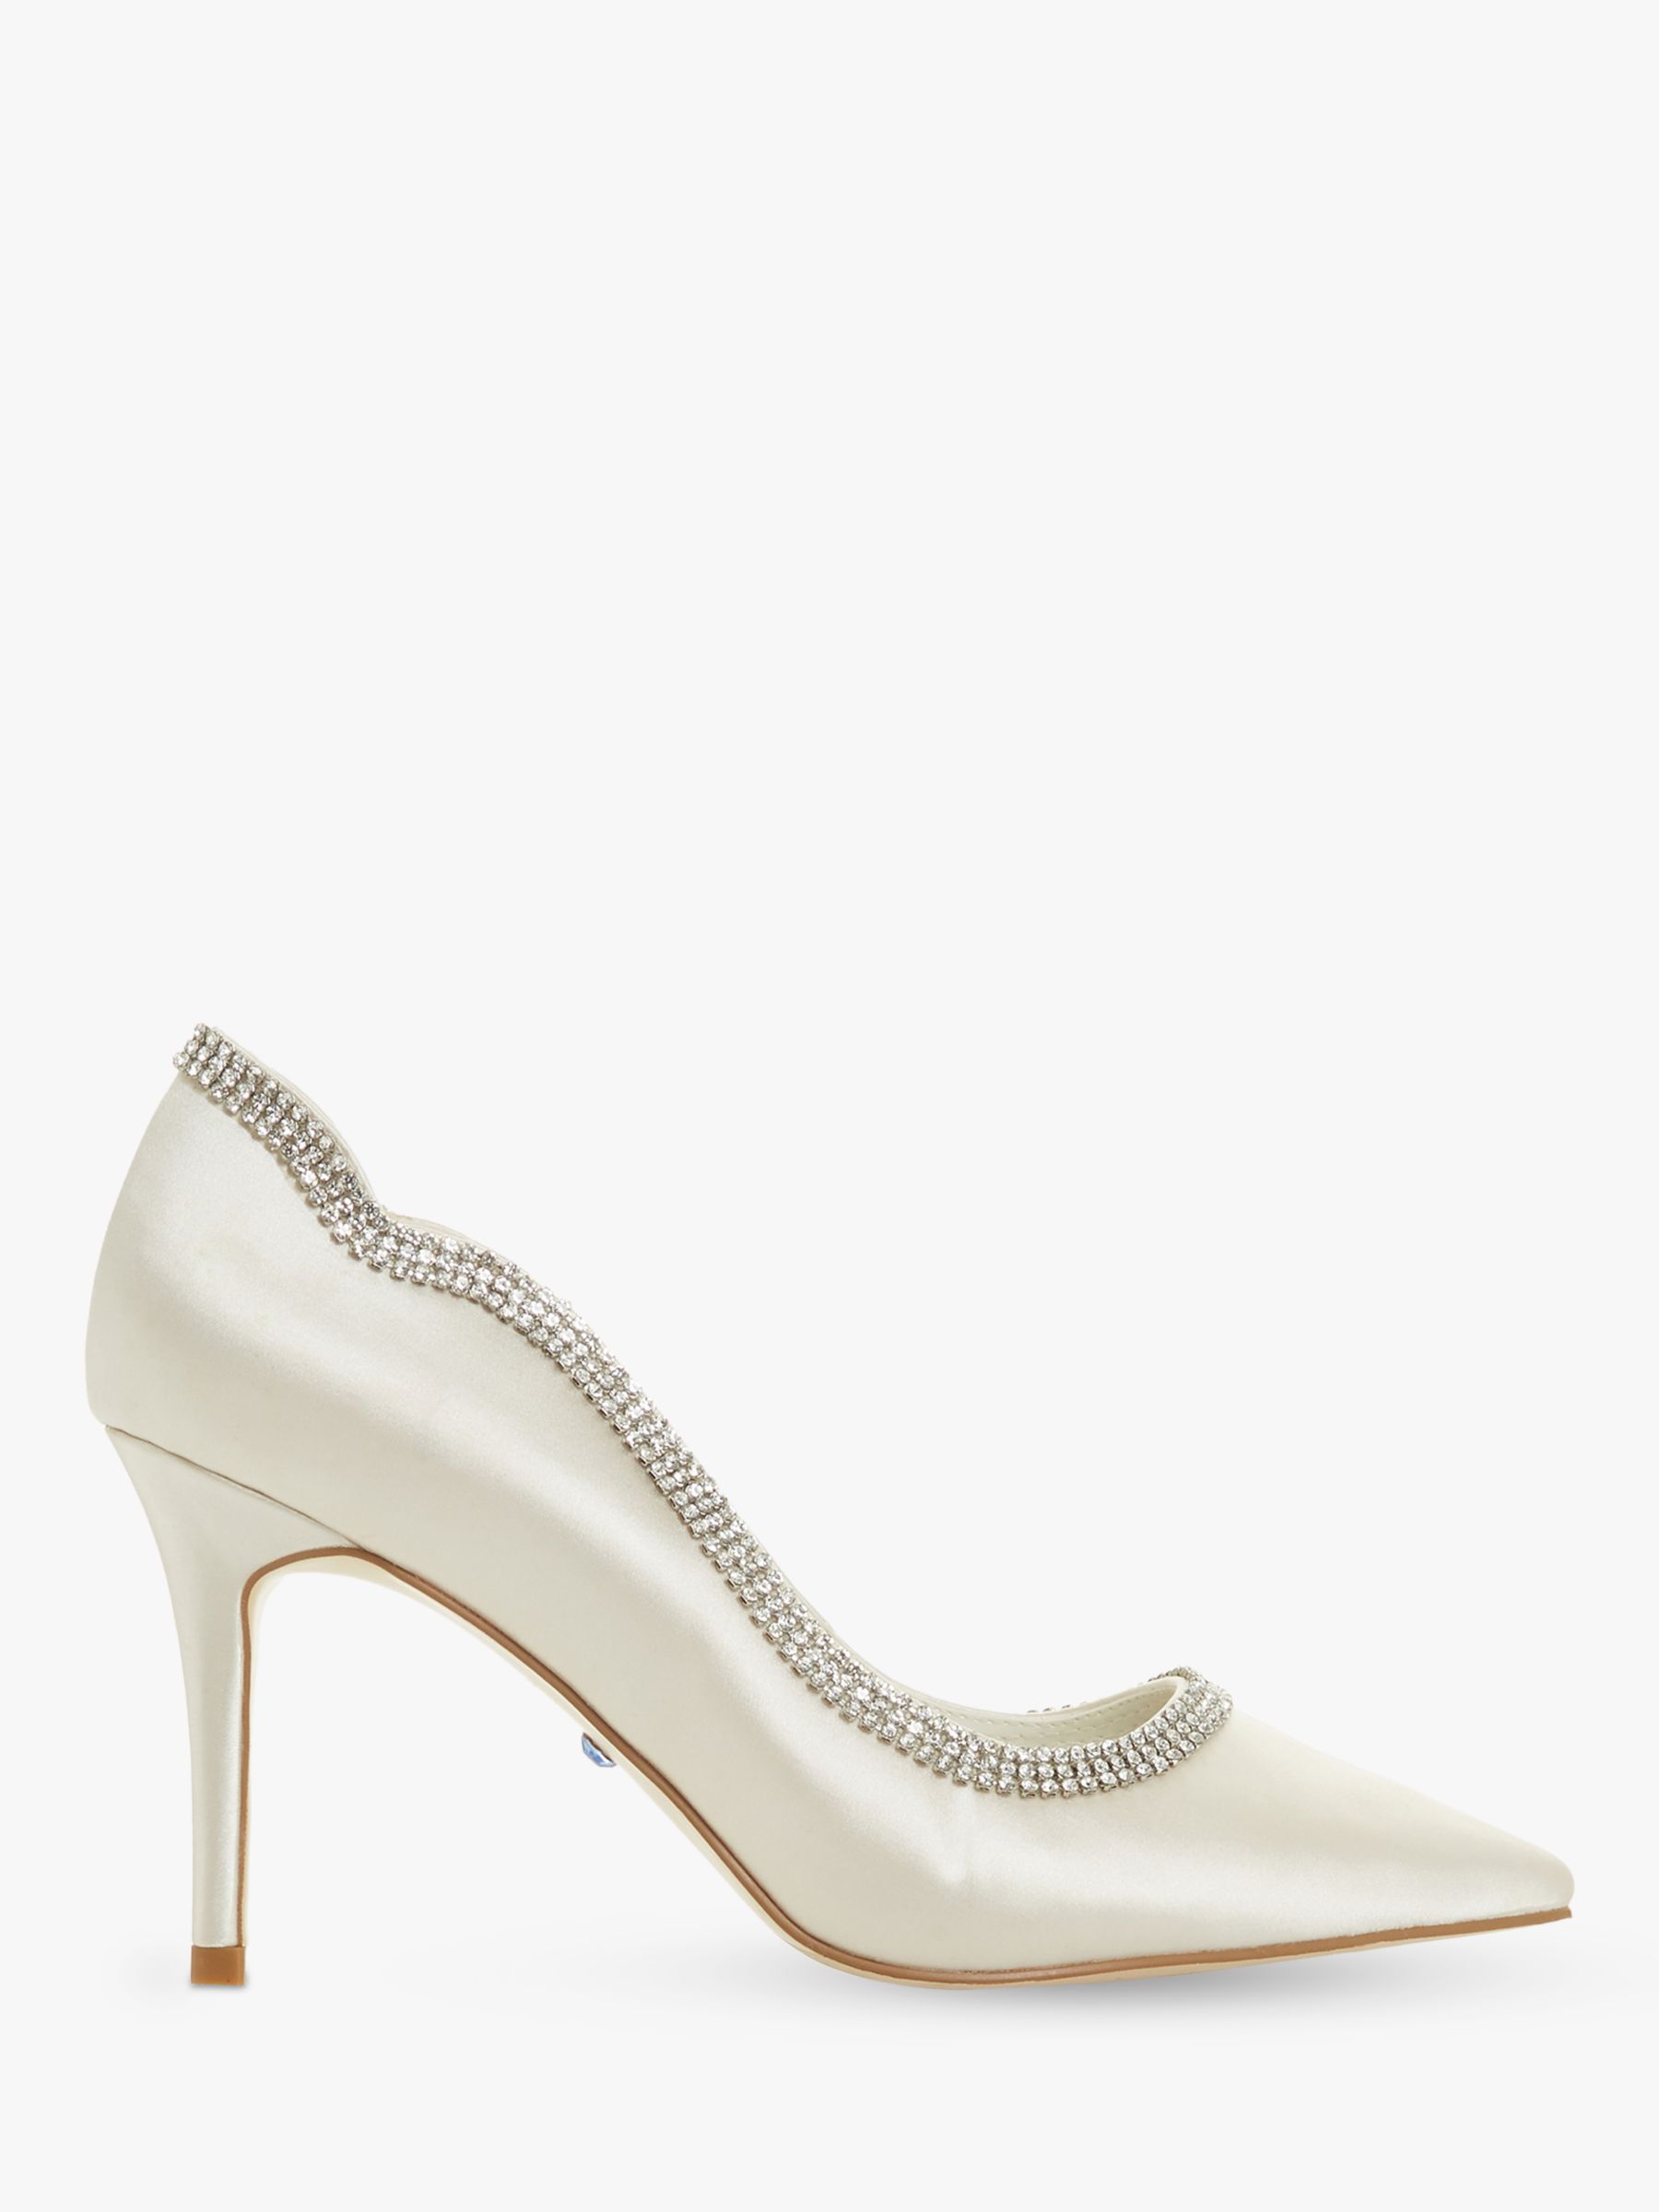 Dune Billi Diamante Embellished Court Shoes, Ivory at John Lewis & Partners